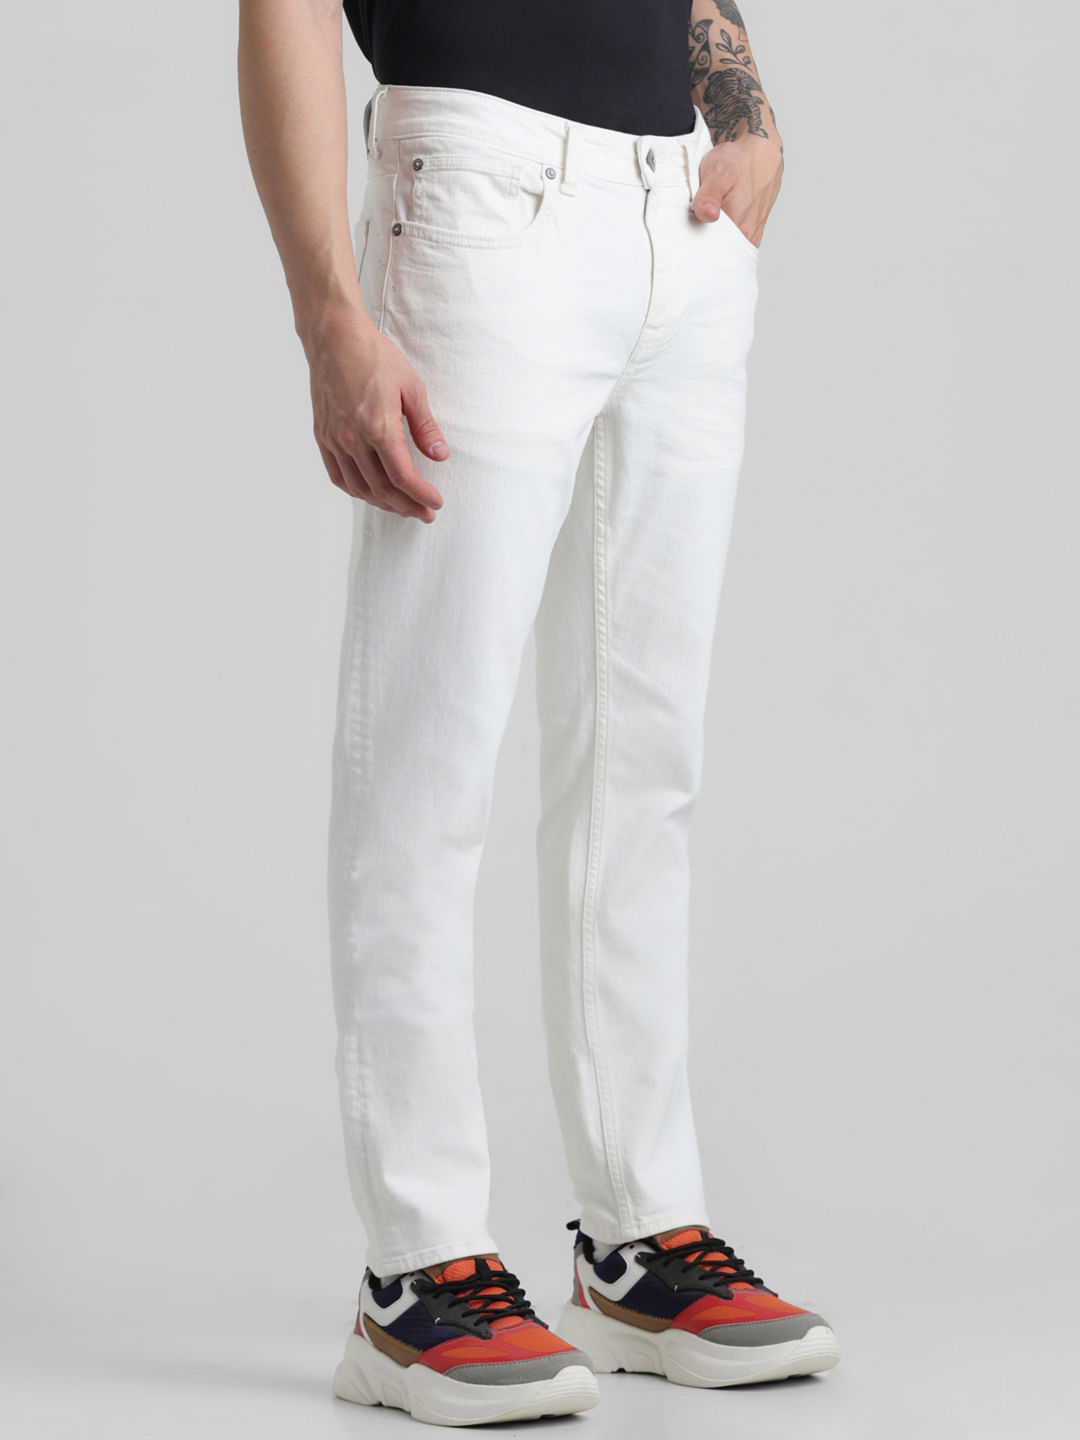 Buy White Jeans for Men by SPYKAR Online | Ajio.com